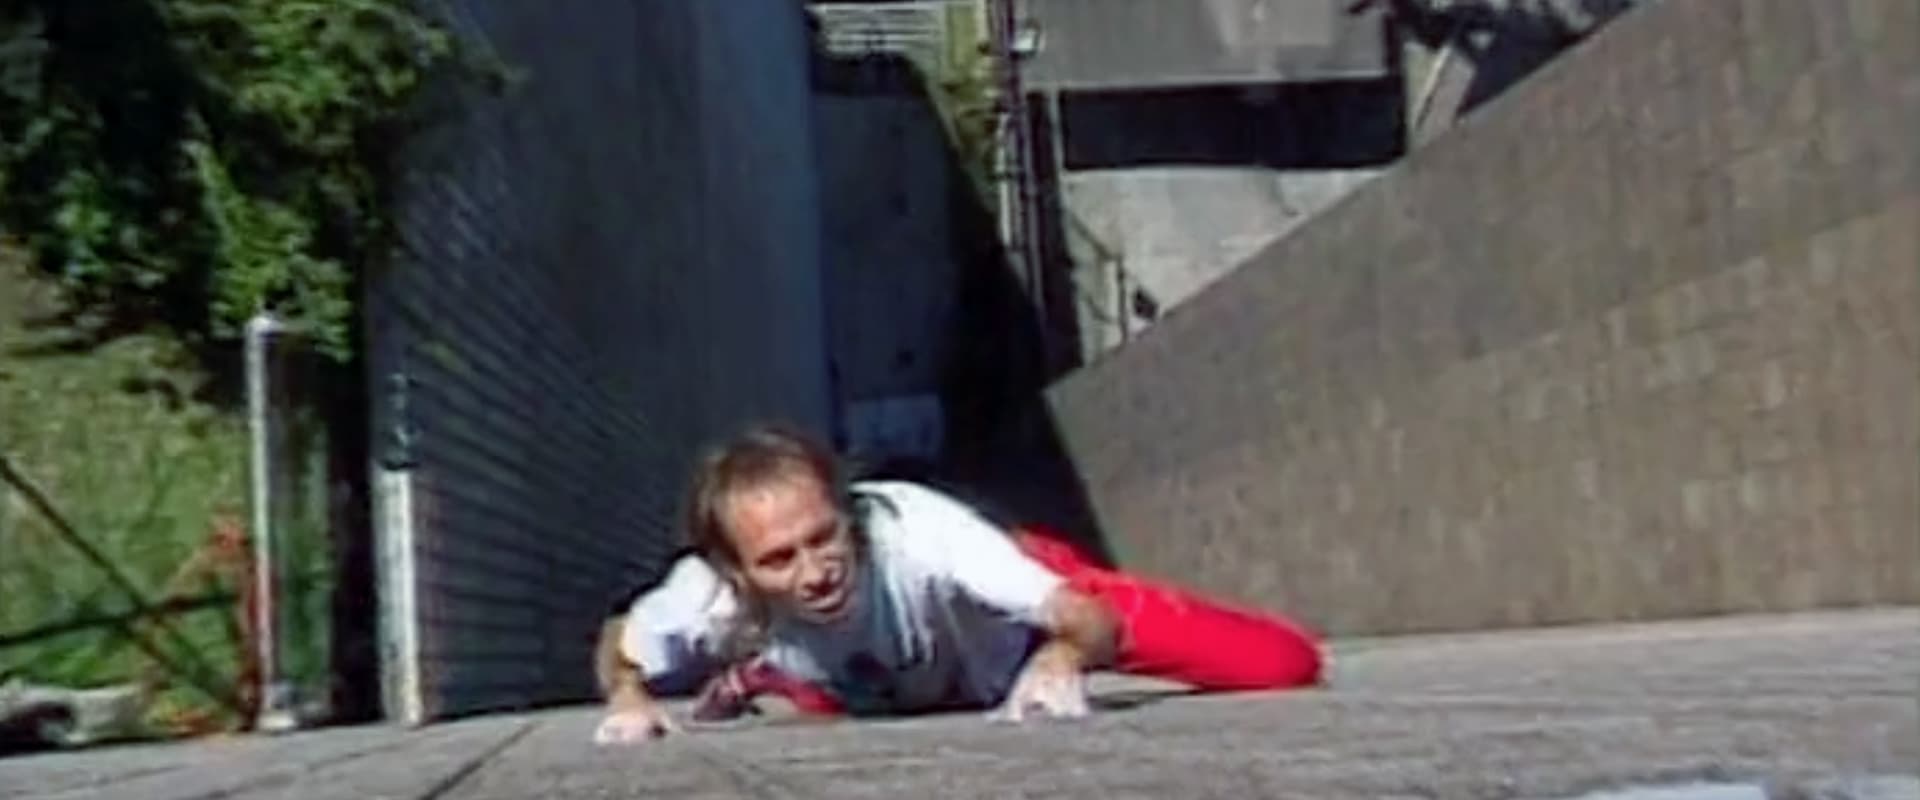 The Wall Crawler: The Verticle Adventures of Alain Robert